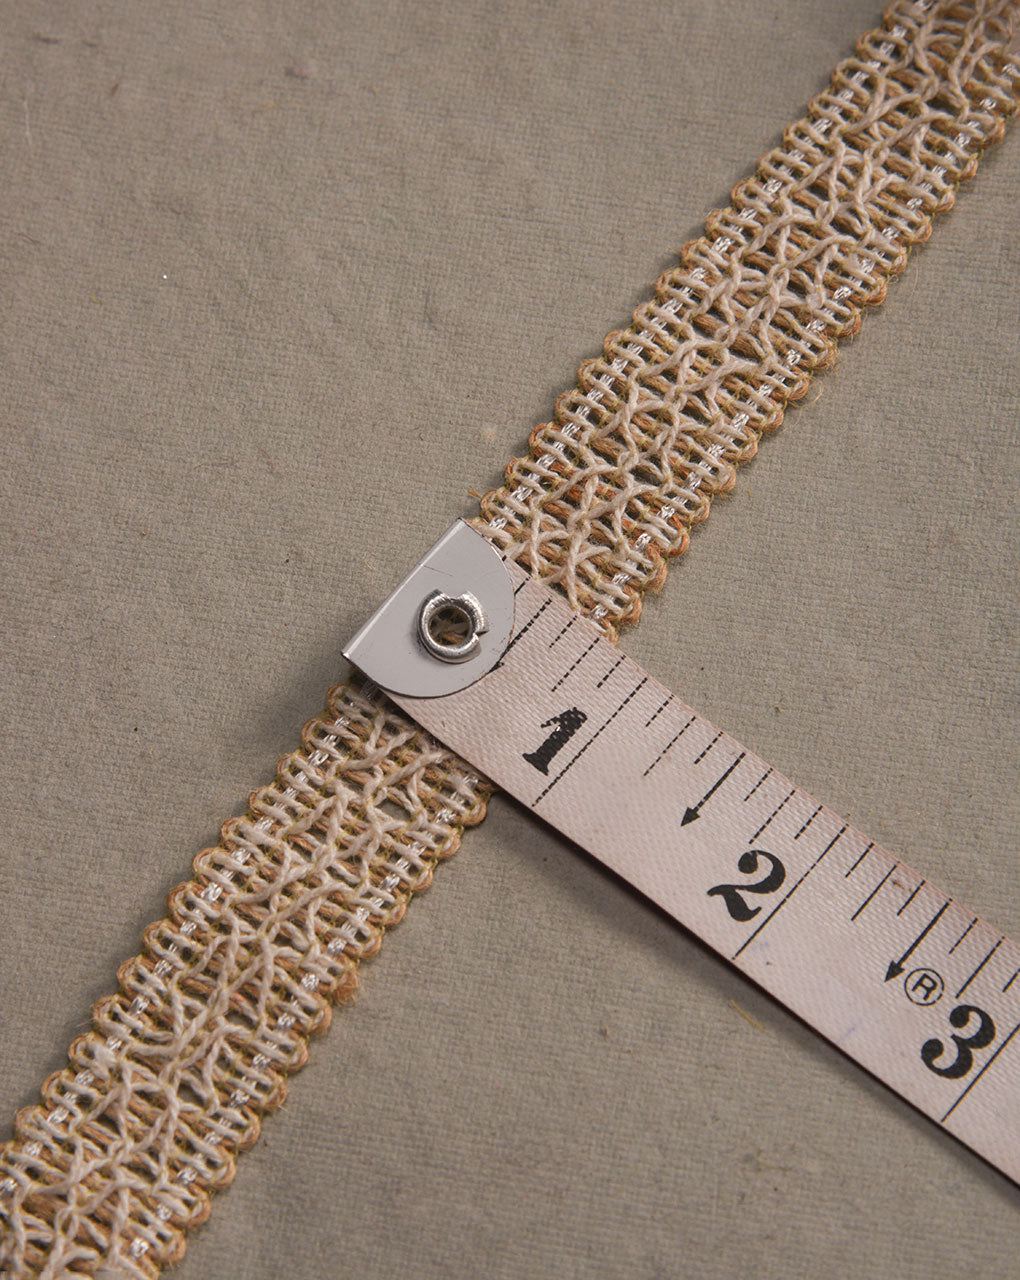 Geometric Patterned Woven Cotton Jute Lace - Fabriclore.com